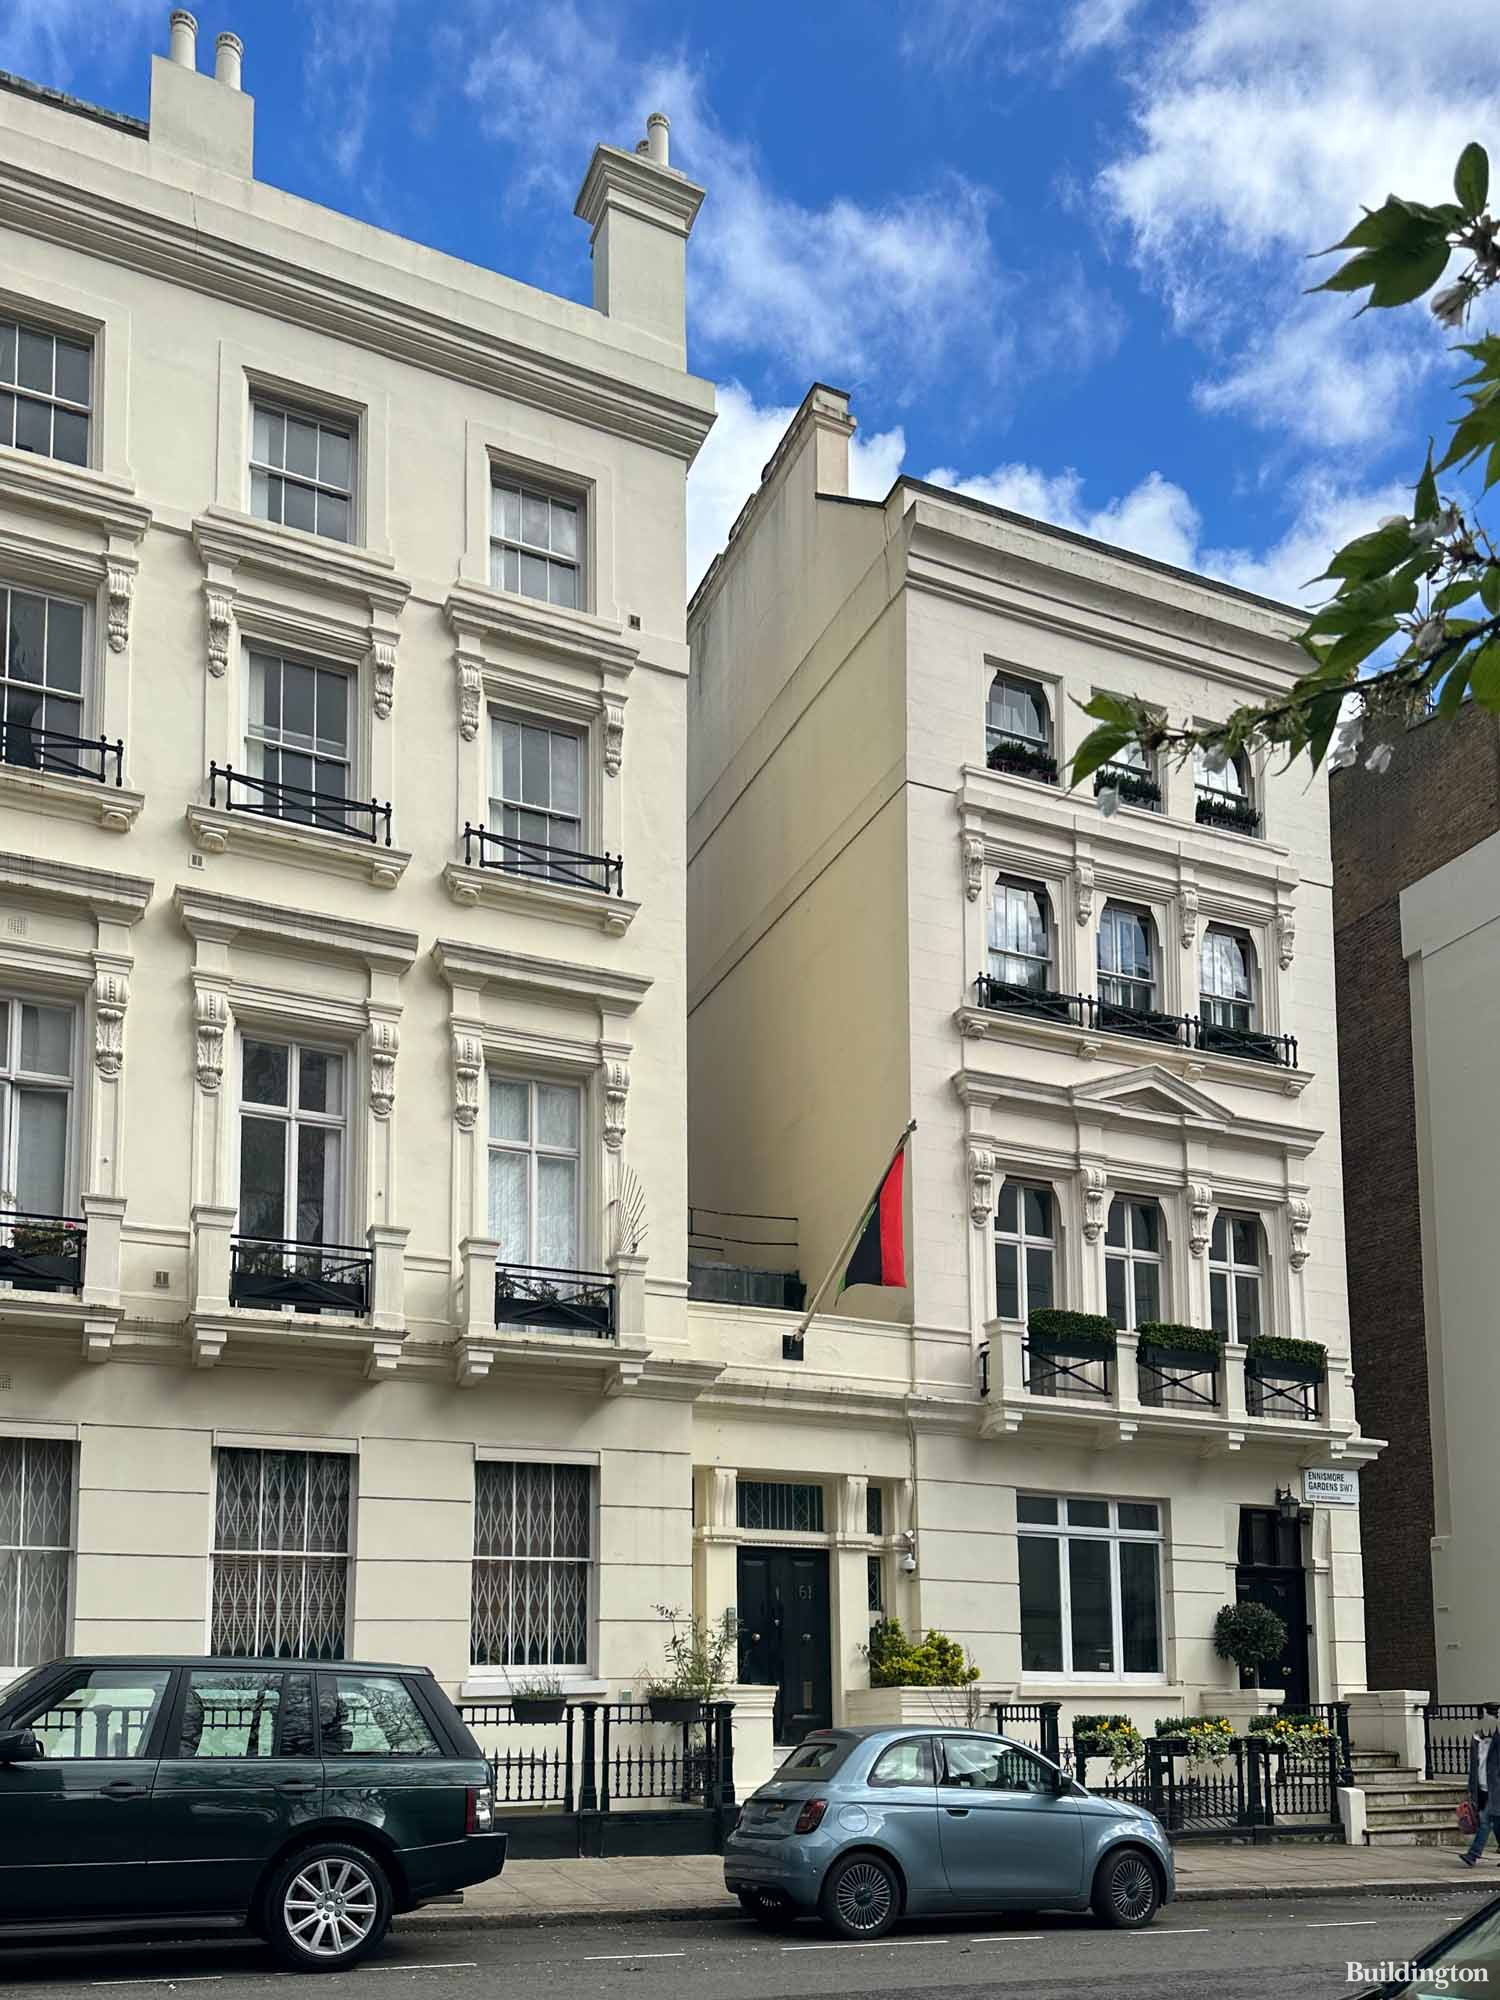 Embasssy of Libya building at 61-62 Ennismore Gardens in Knightsbridge, London SW7